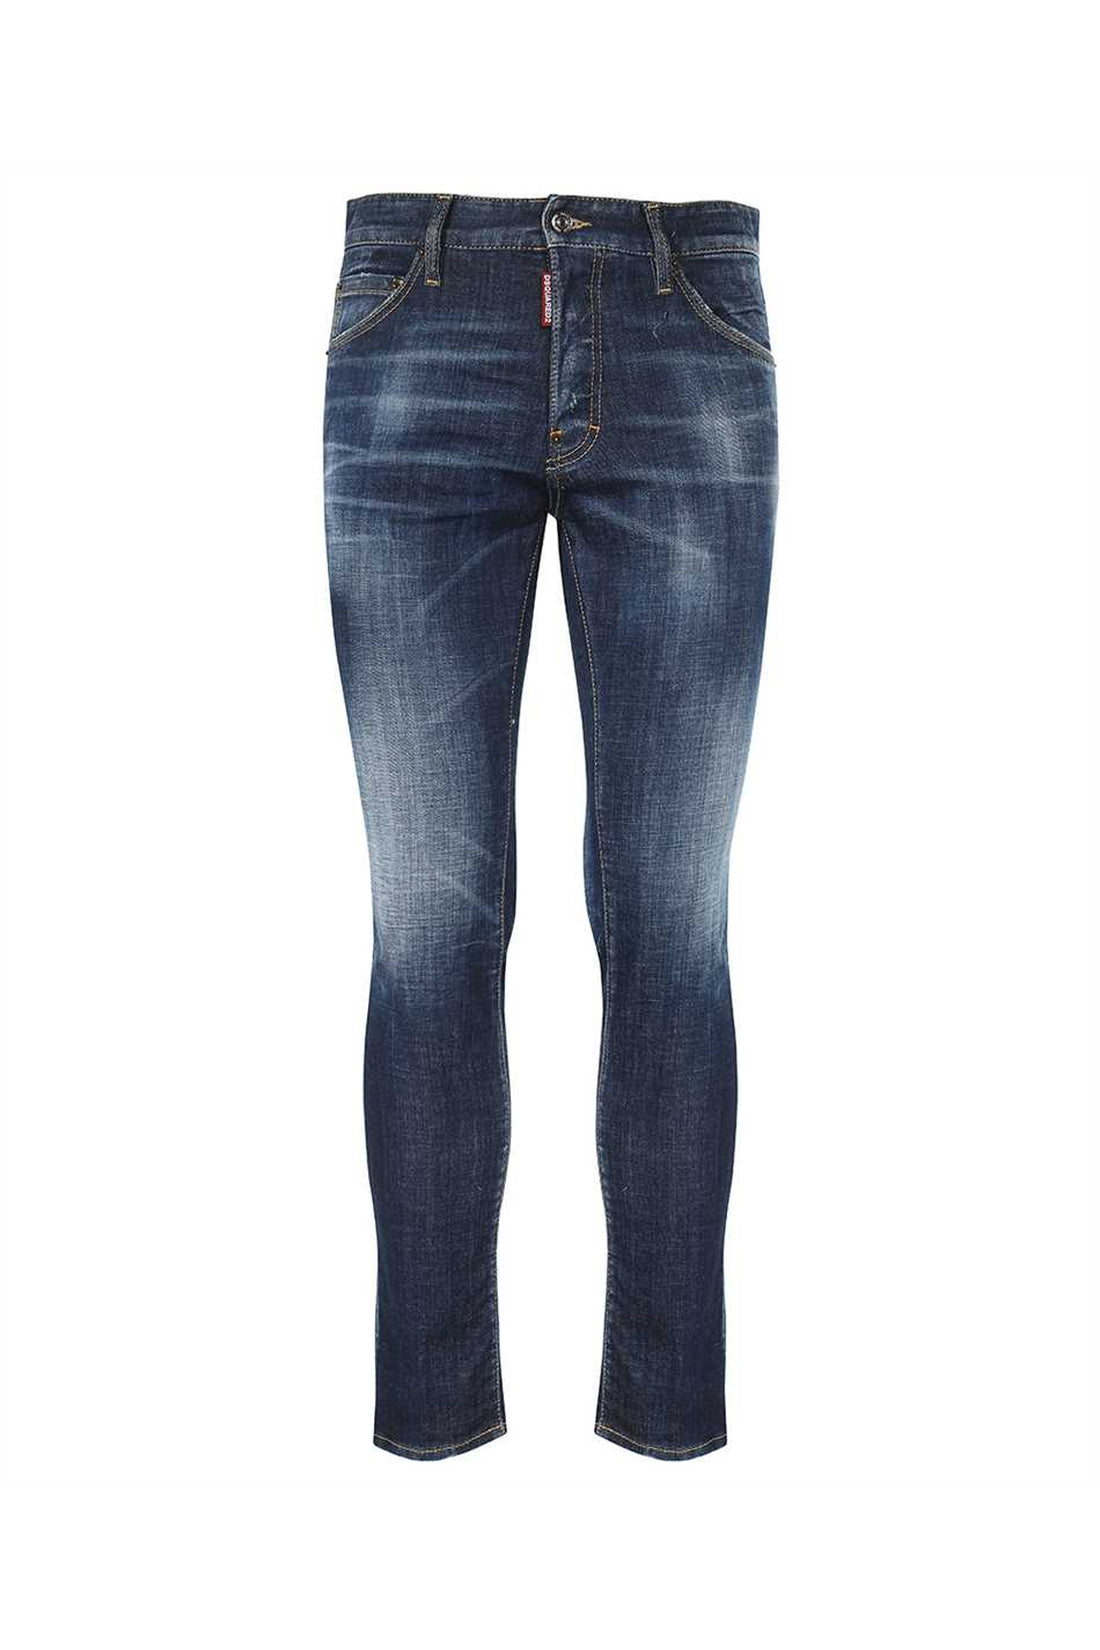 Dsquared2-OUTLET-SALE-Cool Guy jeans-ARCHIVIST